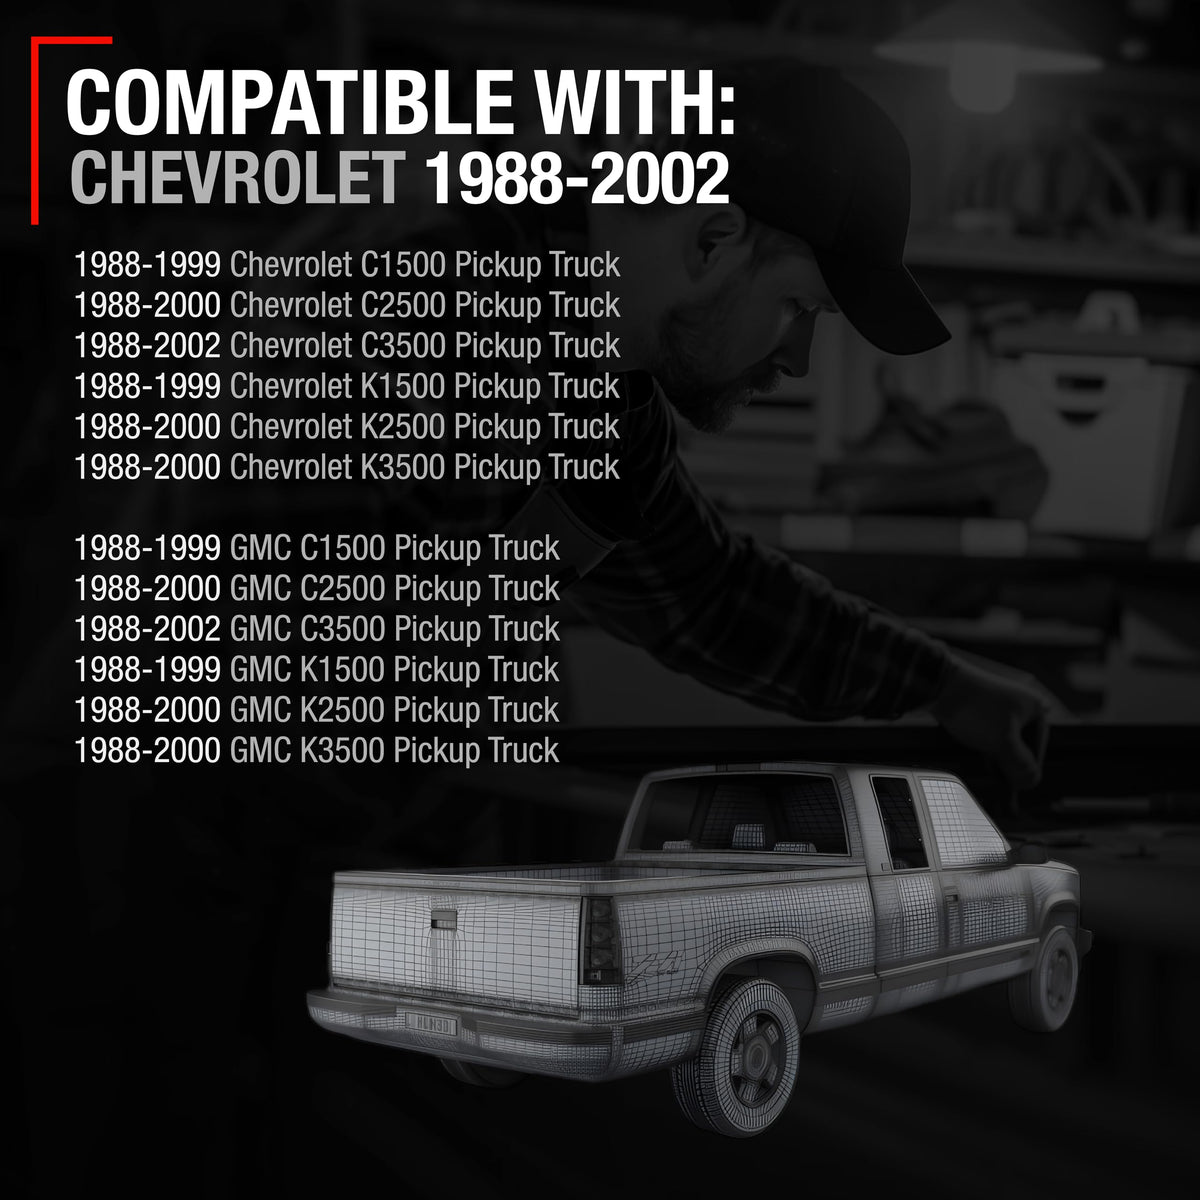 TRUBUILT1 AUTOMOTIVE Tailgate Handle Bezel - Compatible with 1988-2002 Chevrolet, GMC C1500, C2500, C3500, K1500, K2500, K3500 Pickup Trucks - Textured, Plastic - OEM 15991786, 76105, GM1916101